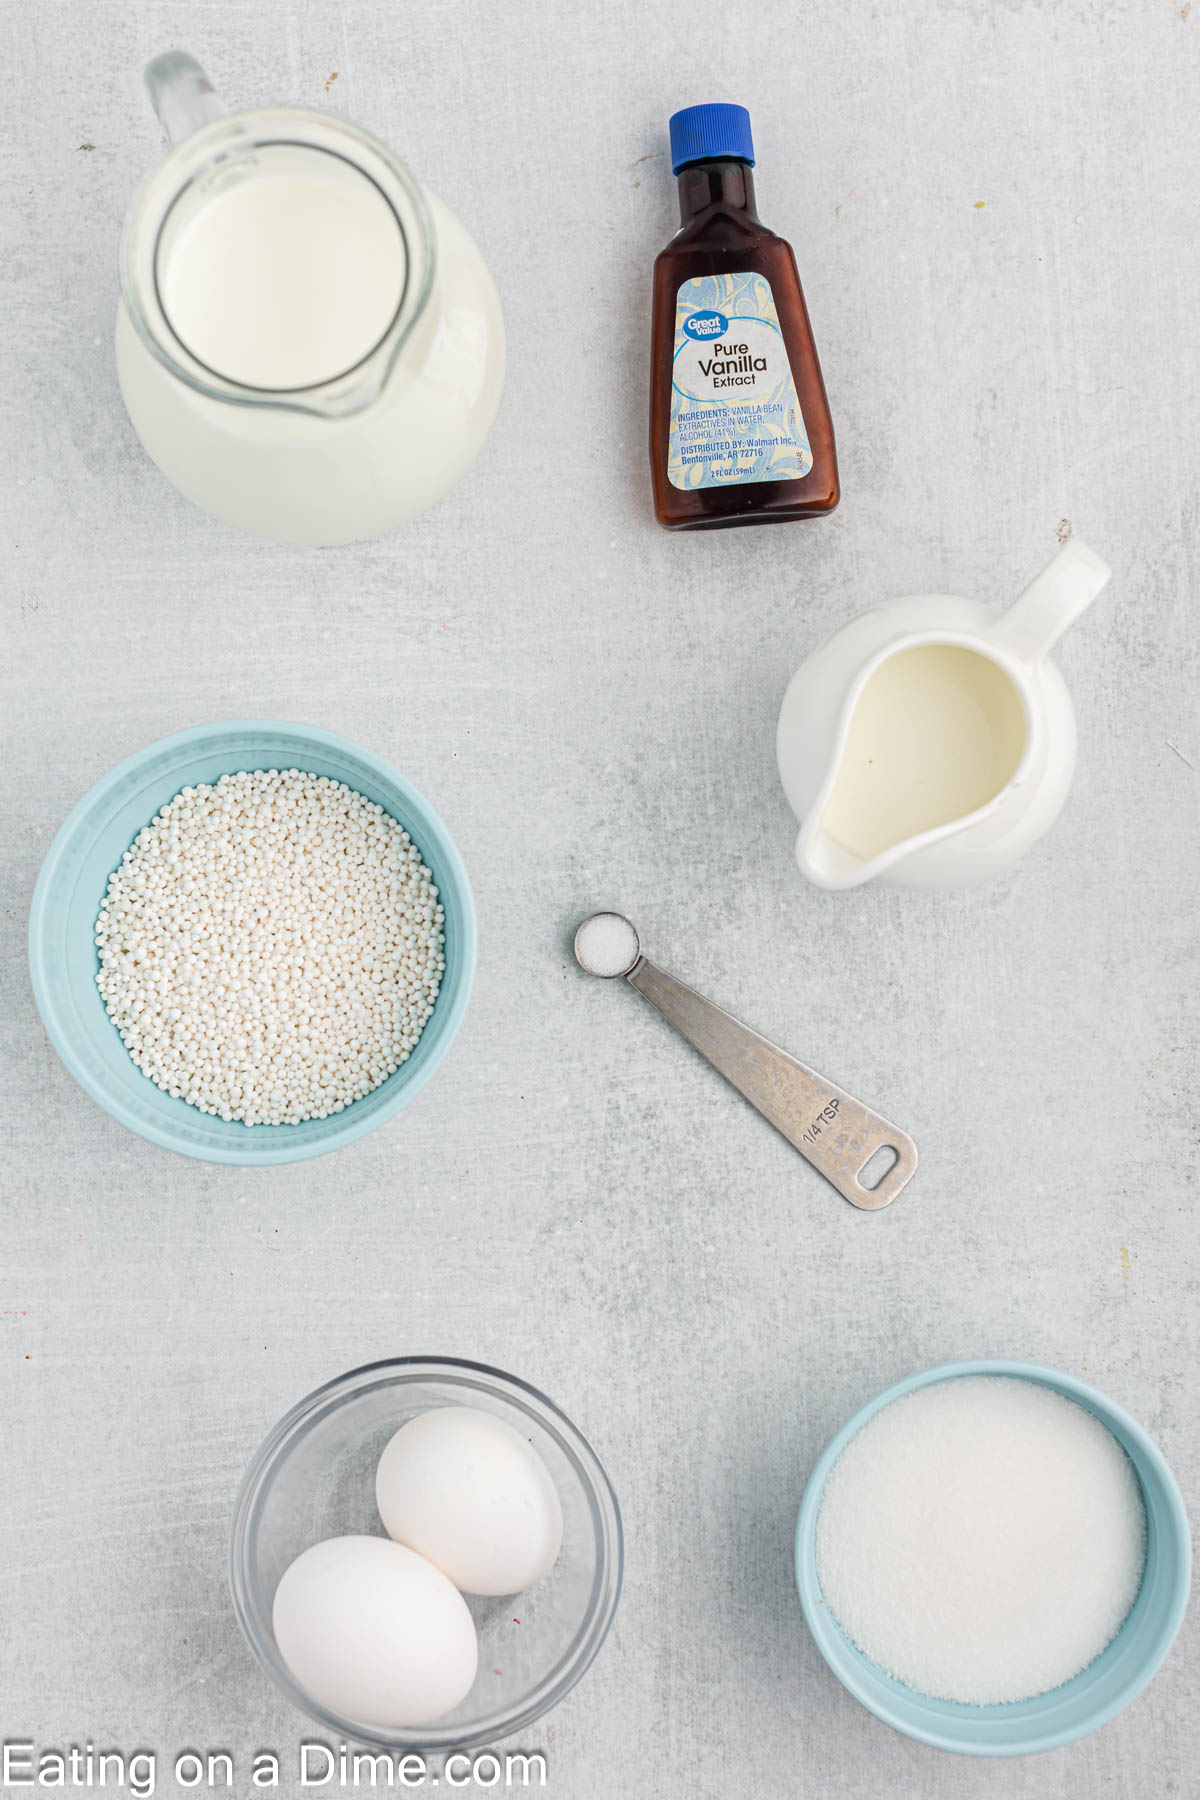 Ingredients needed for Tapioca Pudding - Tapioca Pearls, water, milk, half and half, salt, eggs, sugar, vanilla extract